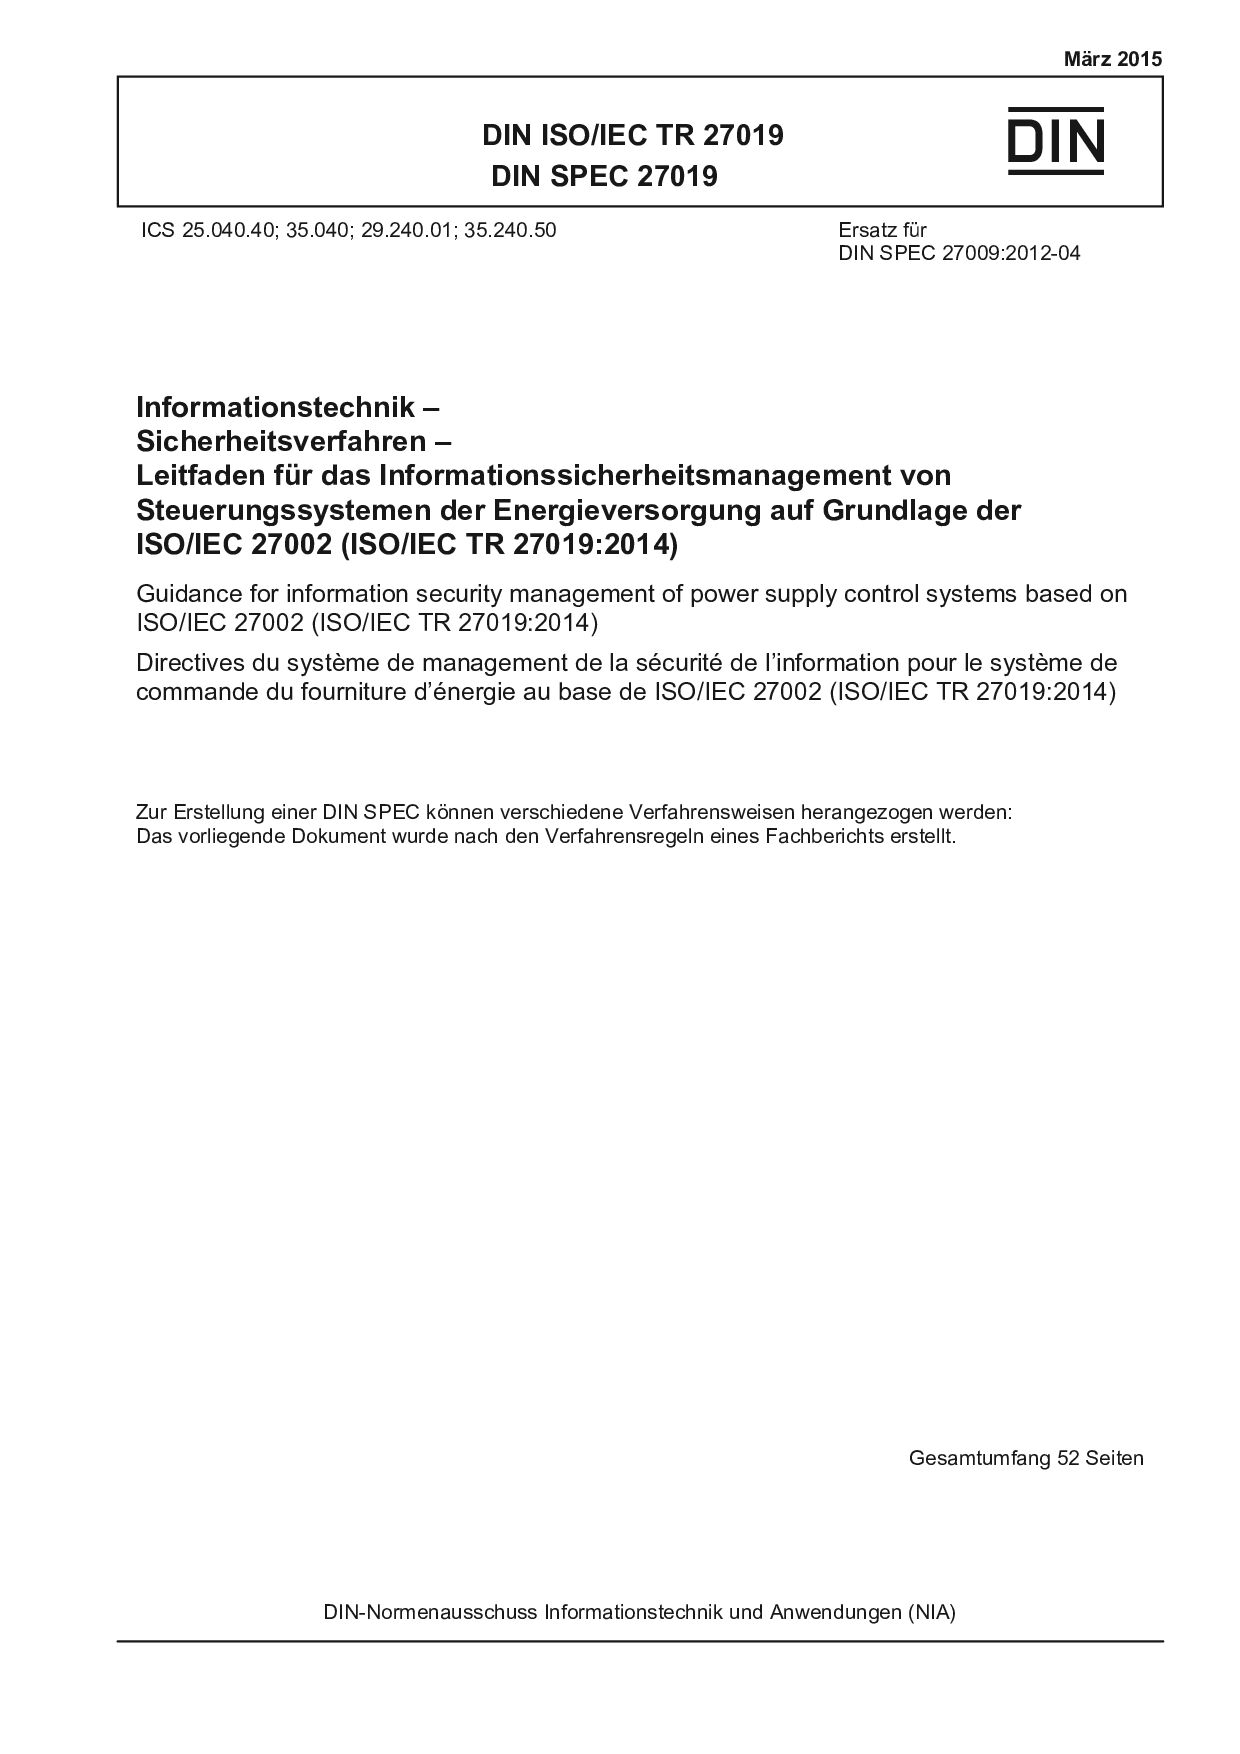 DIN ISO/IEC TR 27019 DIN SPEC 27019:2015-03封面图